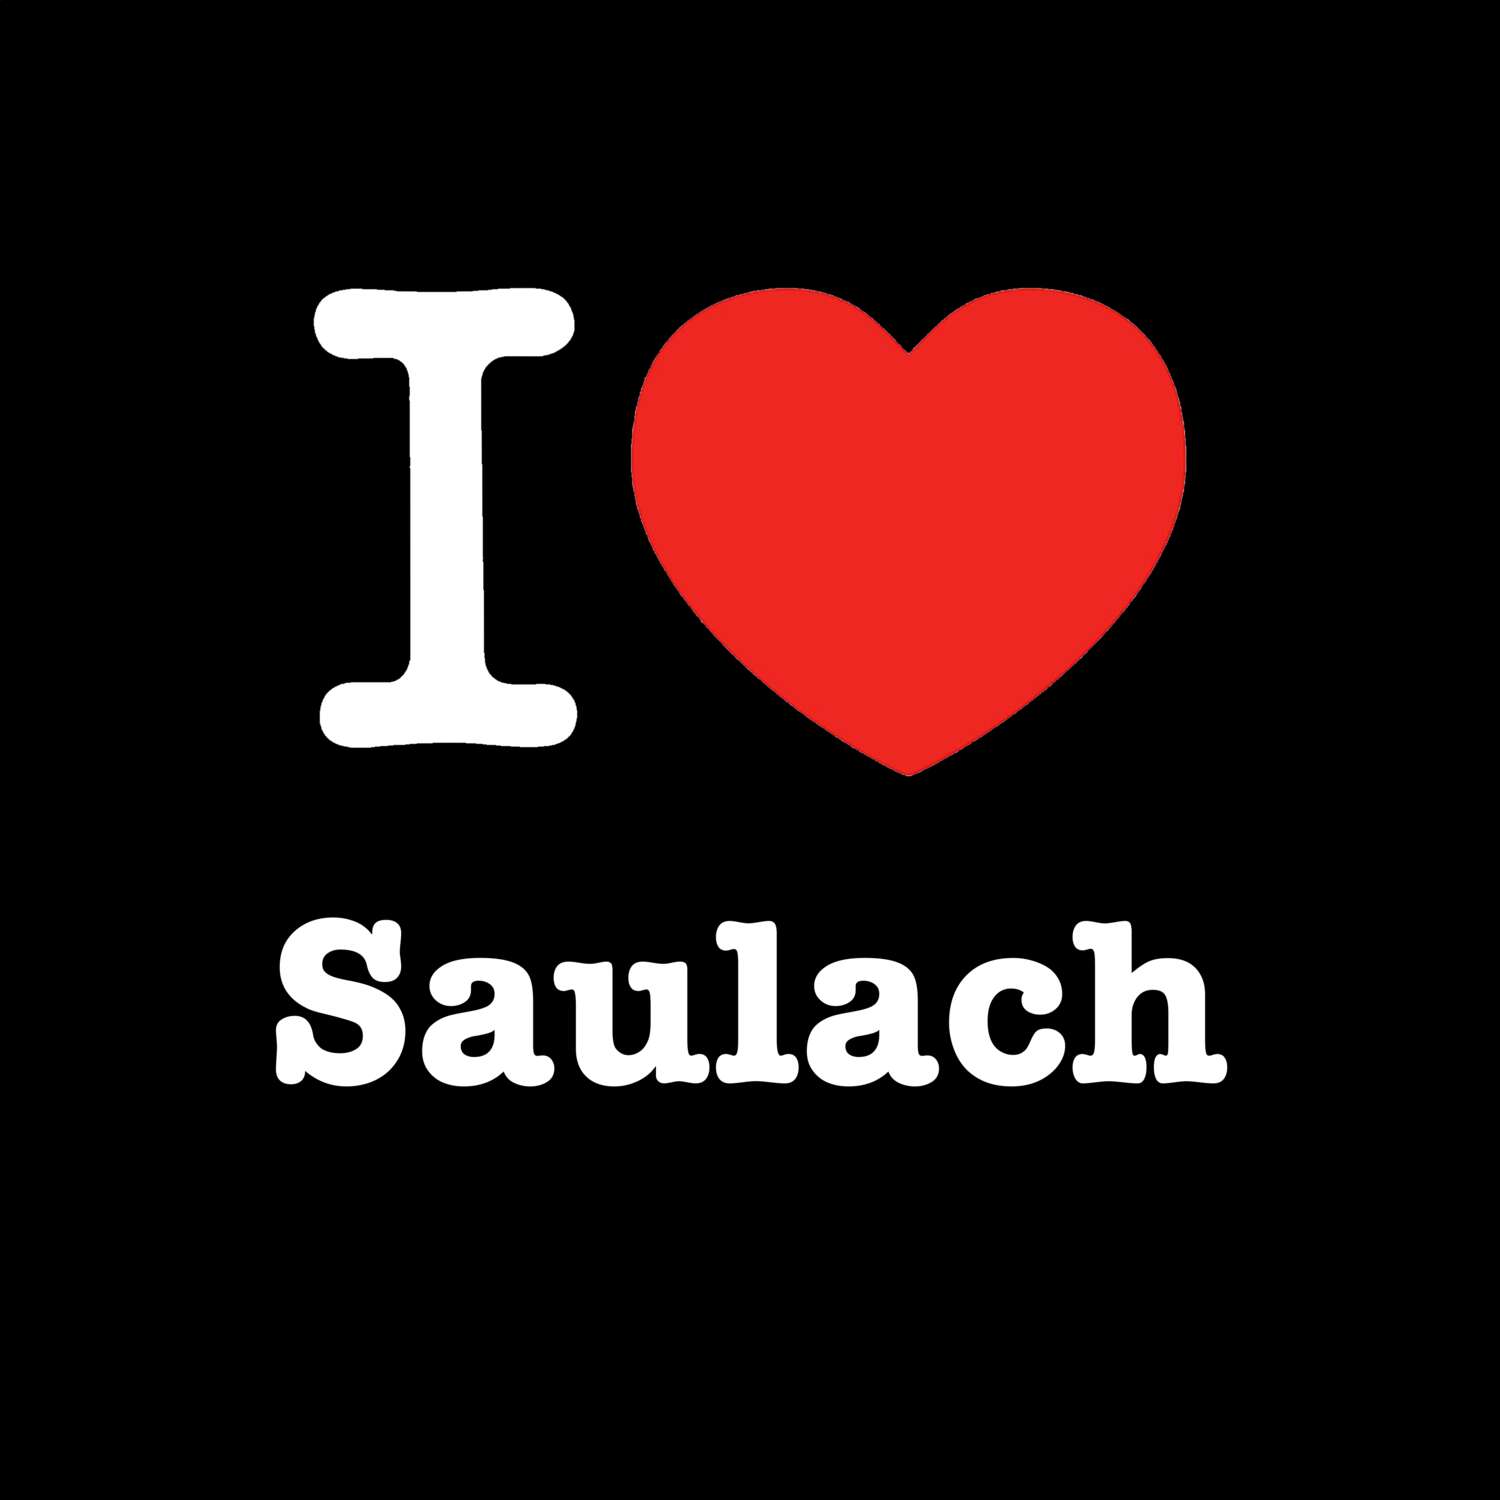 Saulach T-Shirt »I love«